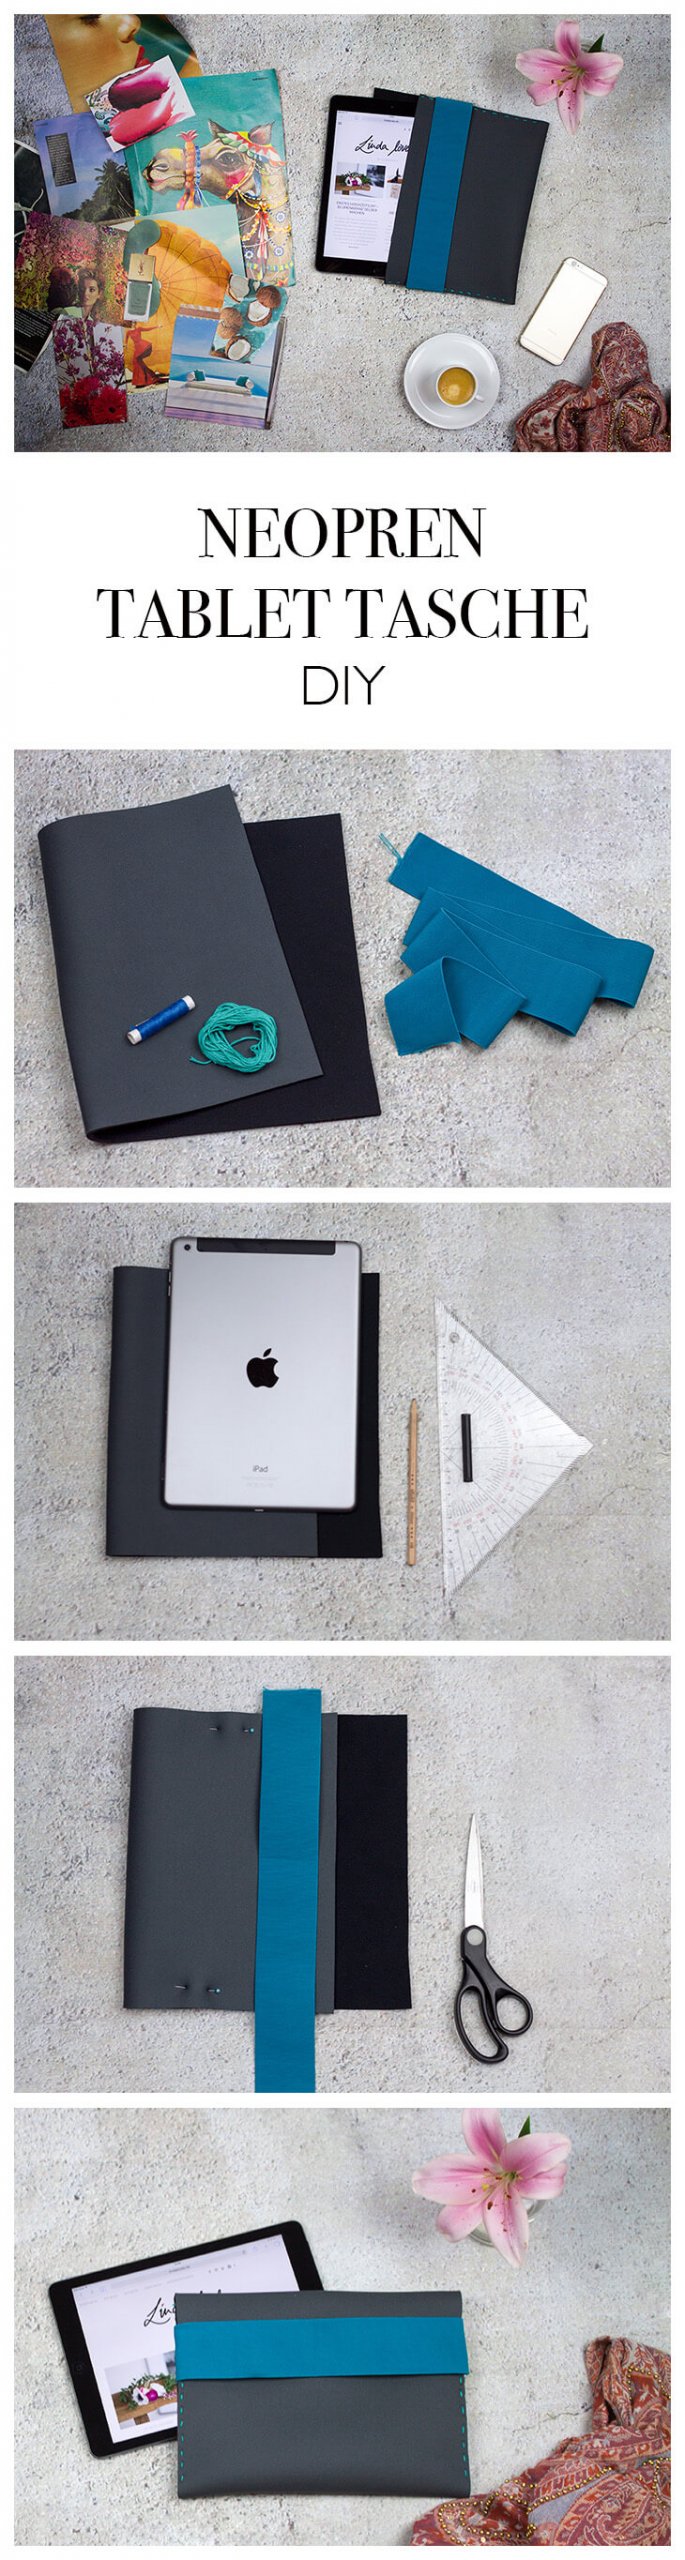 DIY Neopren Tablet Tasche nähen mit Gummiband - Geschenkidee - Step-by-Step Anleitung - DIY Blog lindaloves.de